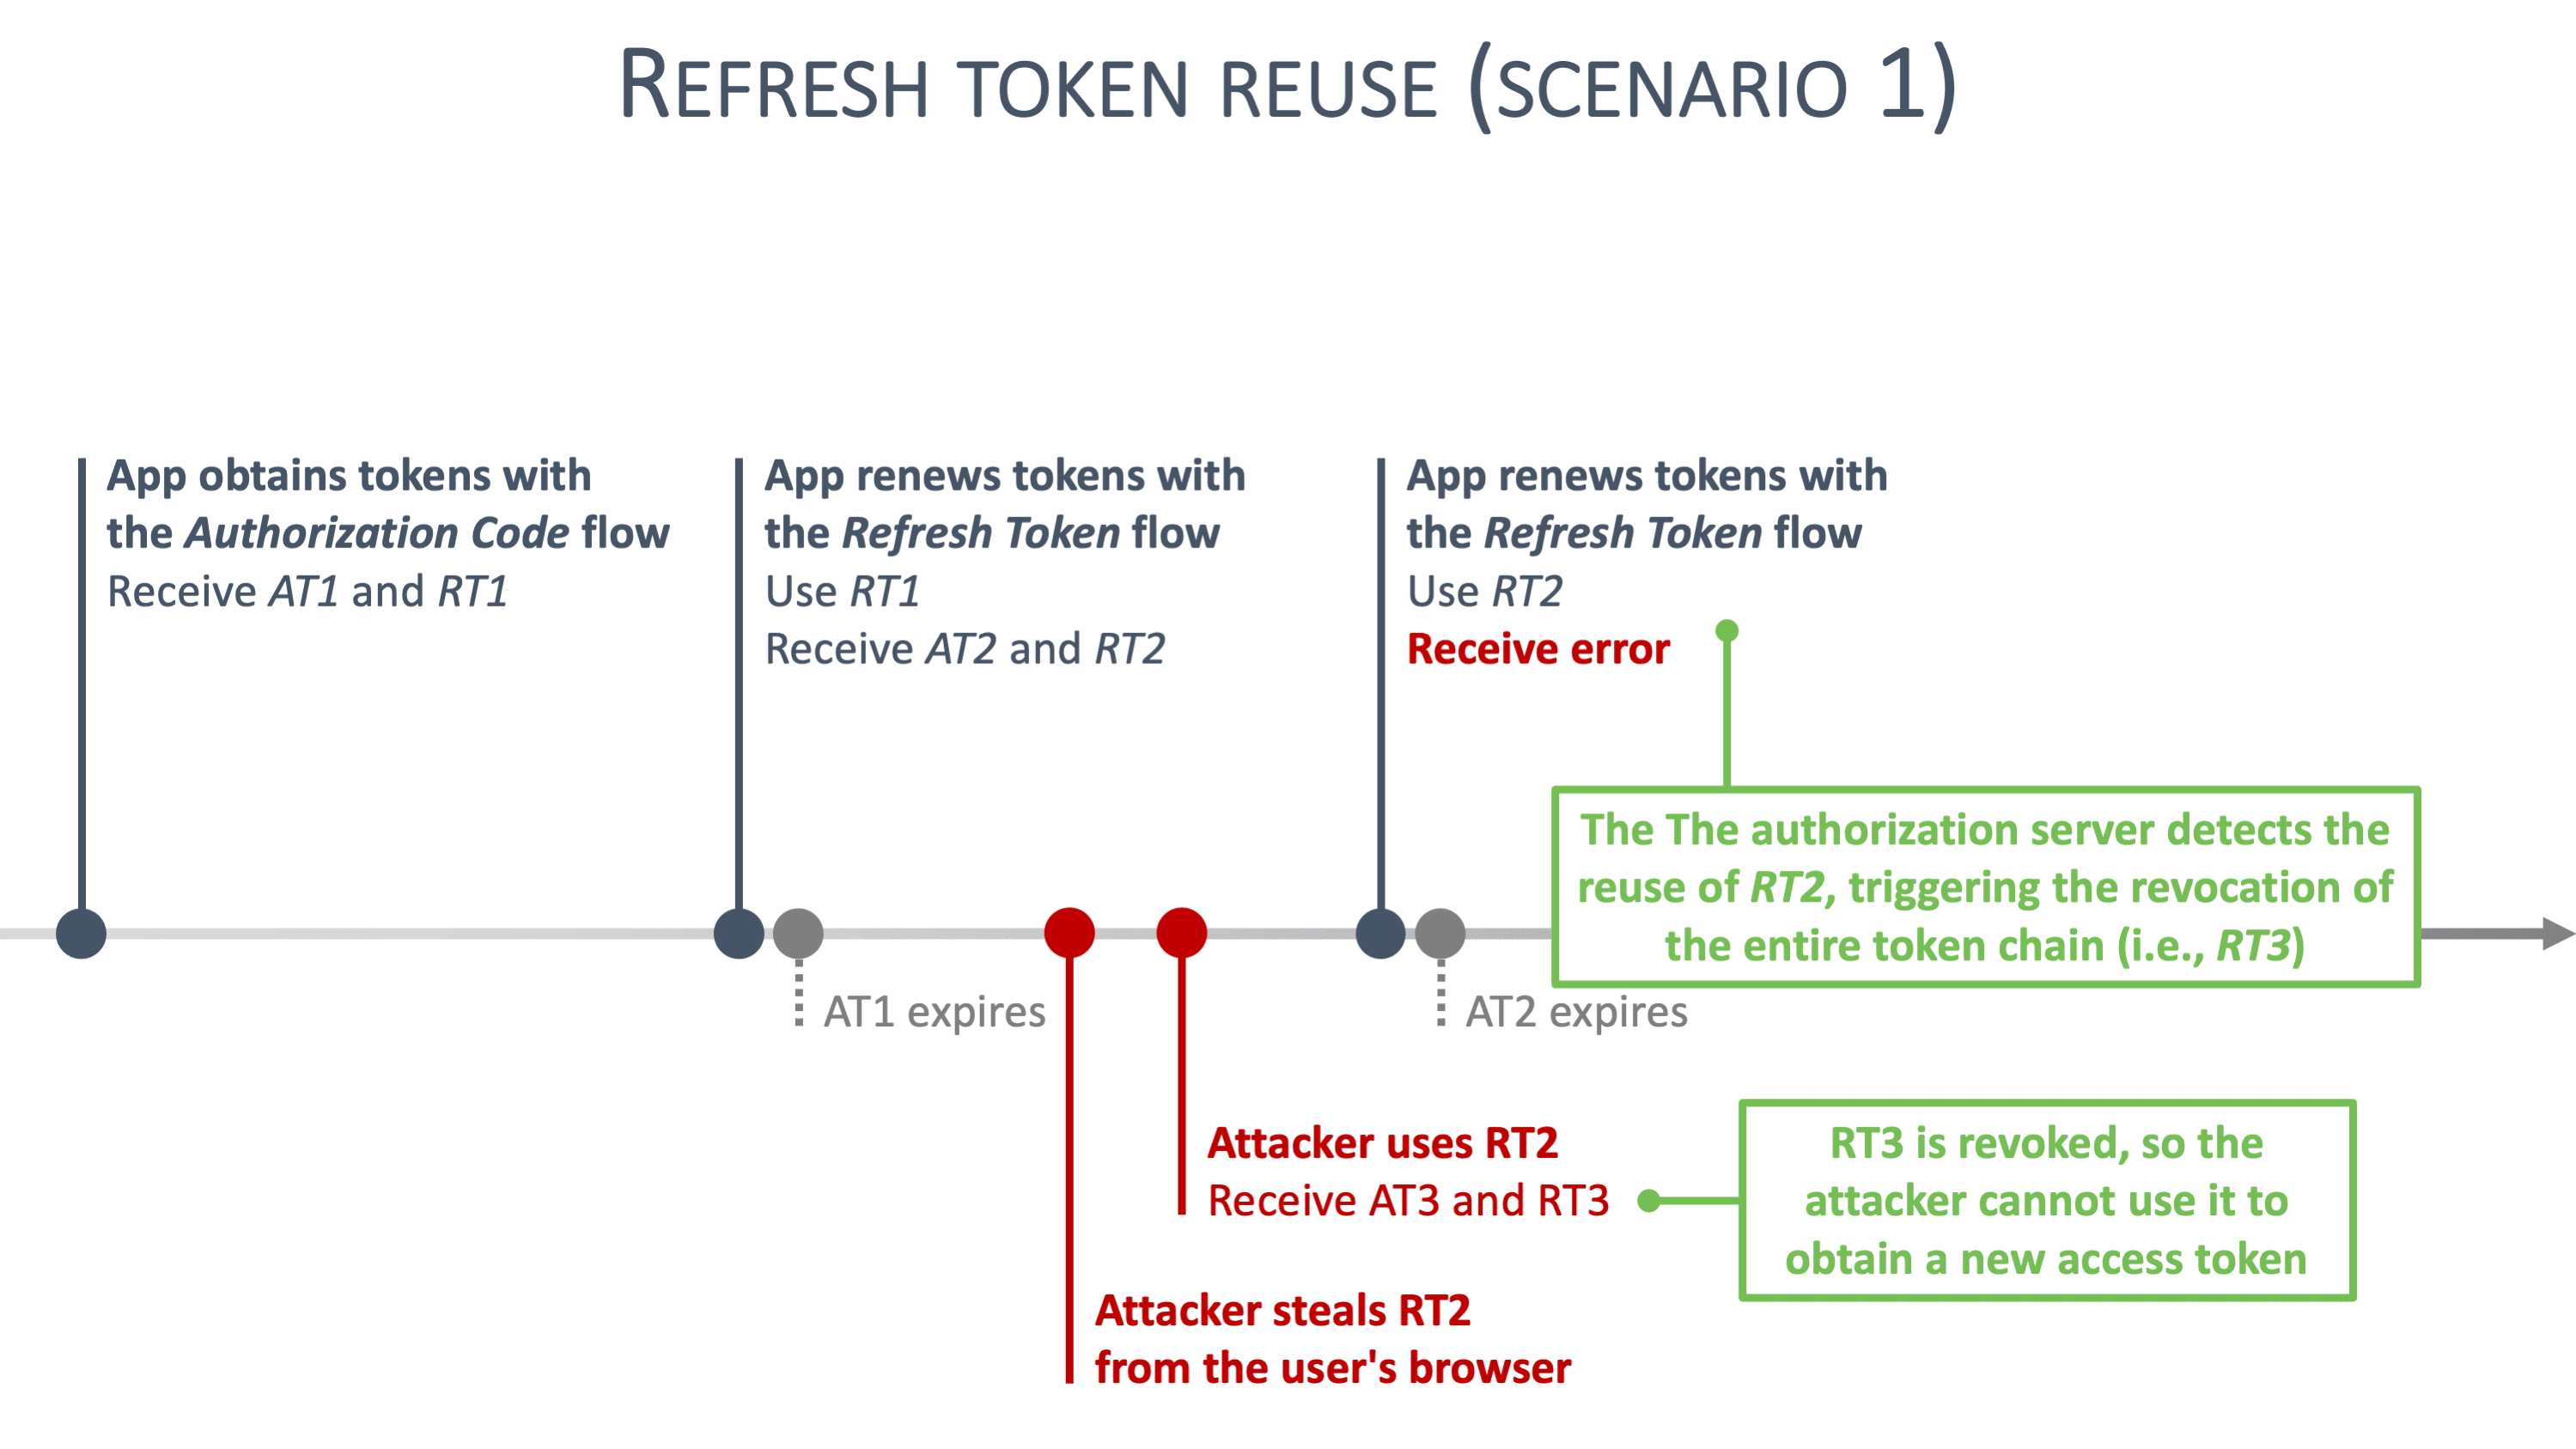 Refresh token reuse scenario 1 depicting end-to-end flow